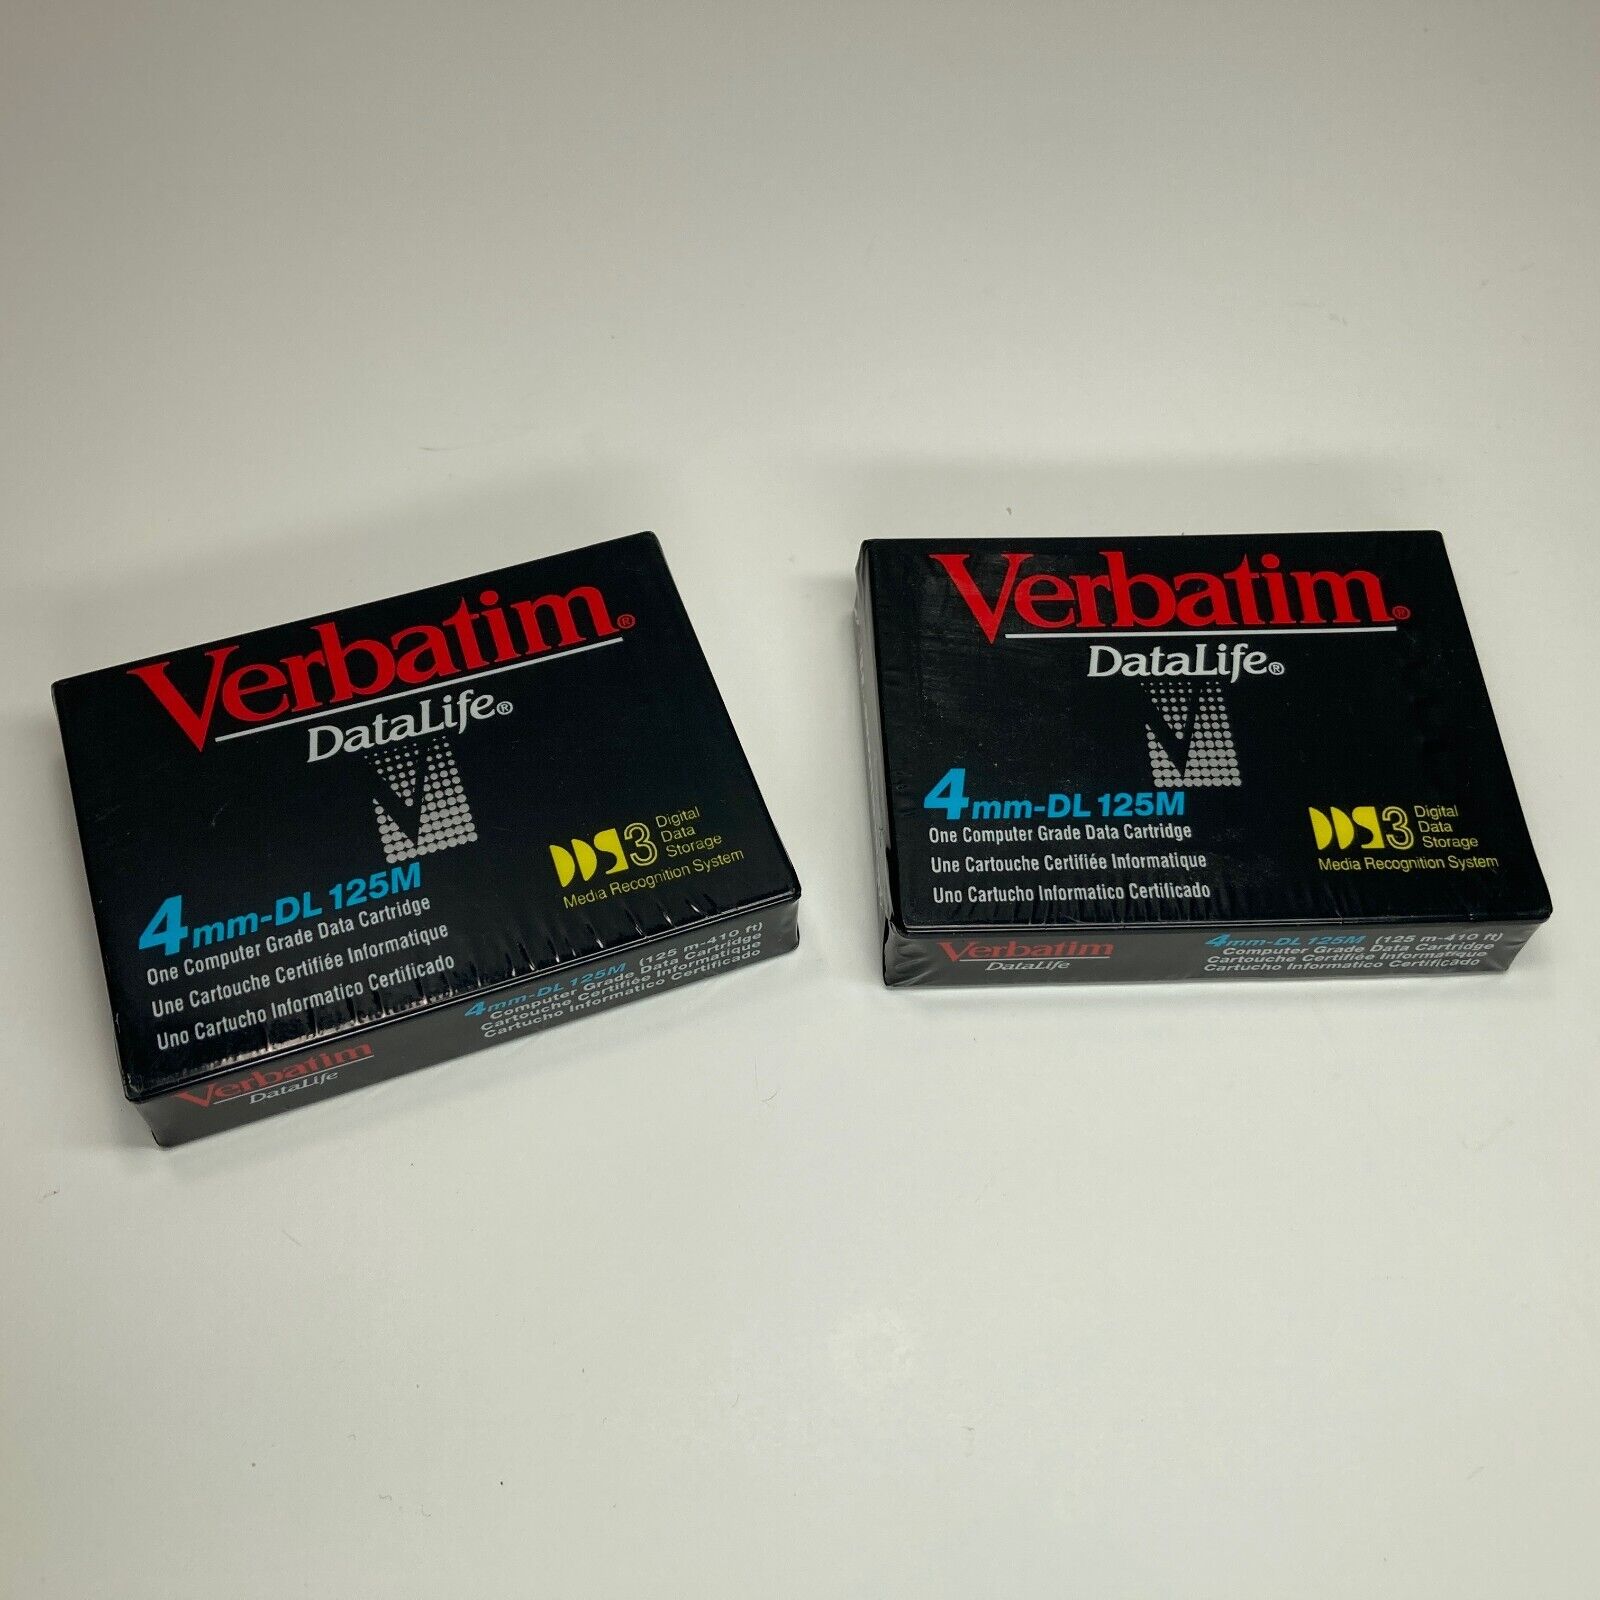 Verbatim 12/24GB DDS3 4MM 125M DAT Cartridges, BRAND NEW Sealed, Lot of 2 (Two)